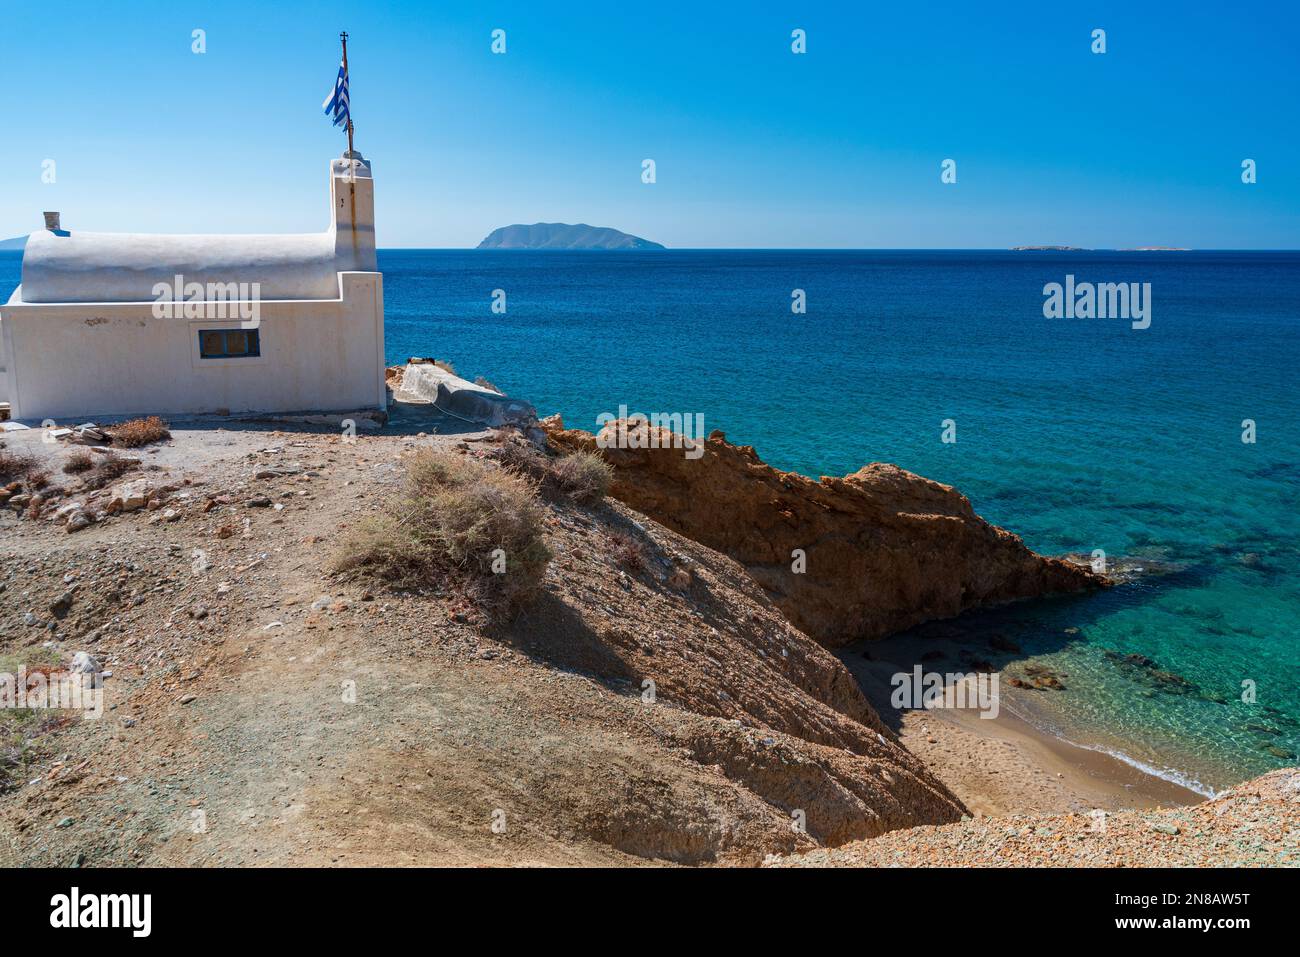 Agioi Anargyroi beach and church, Anafi Stock Photo